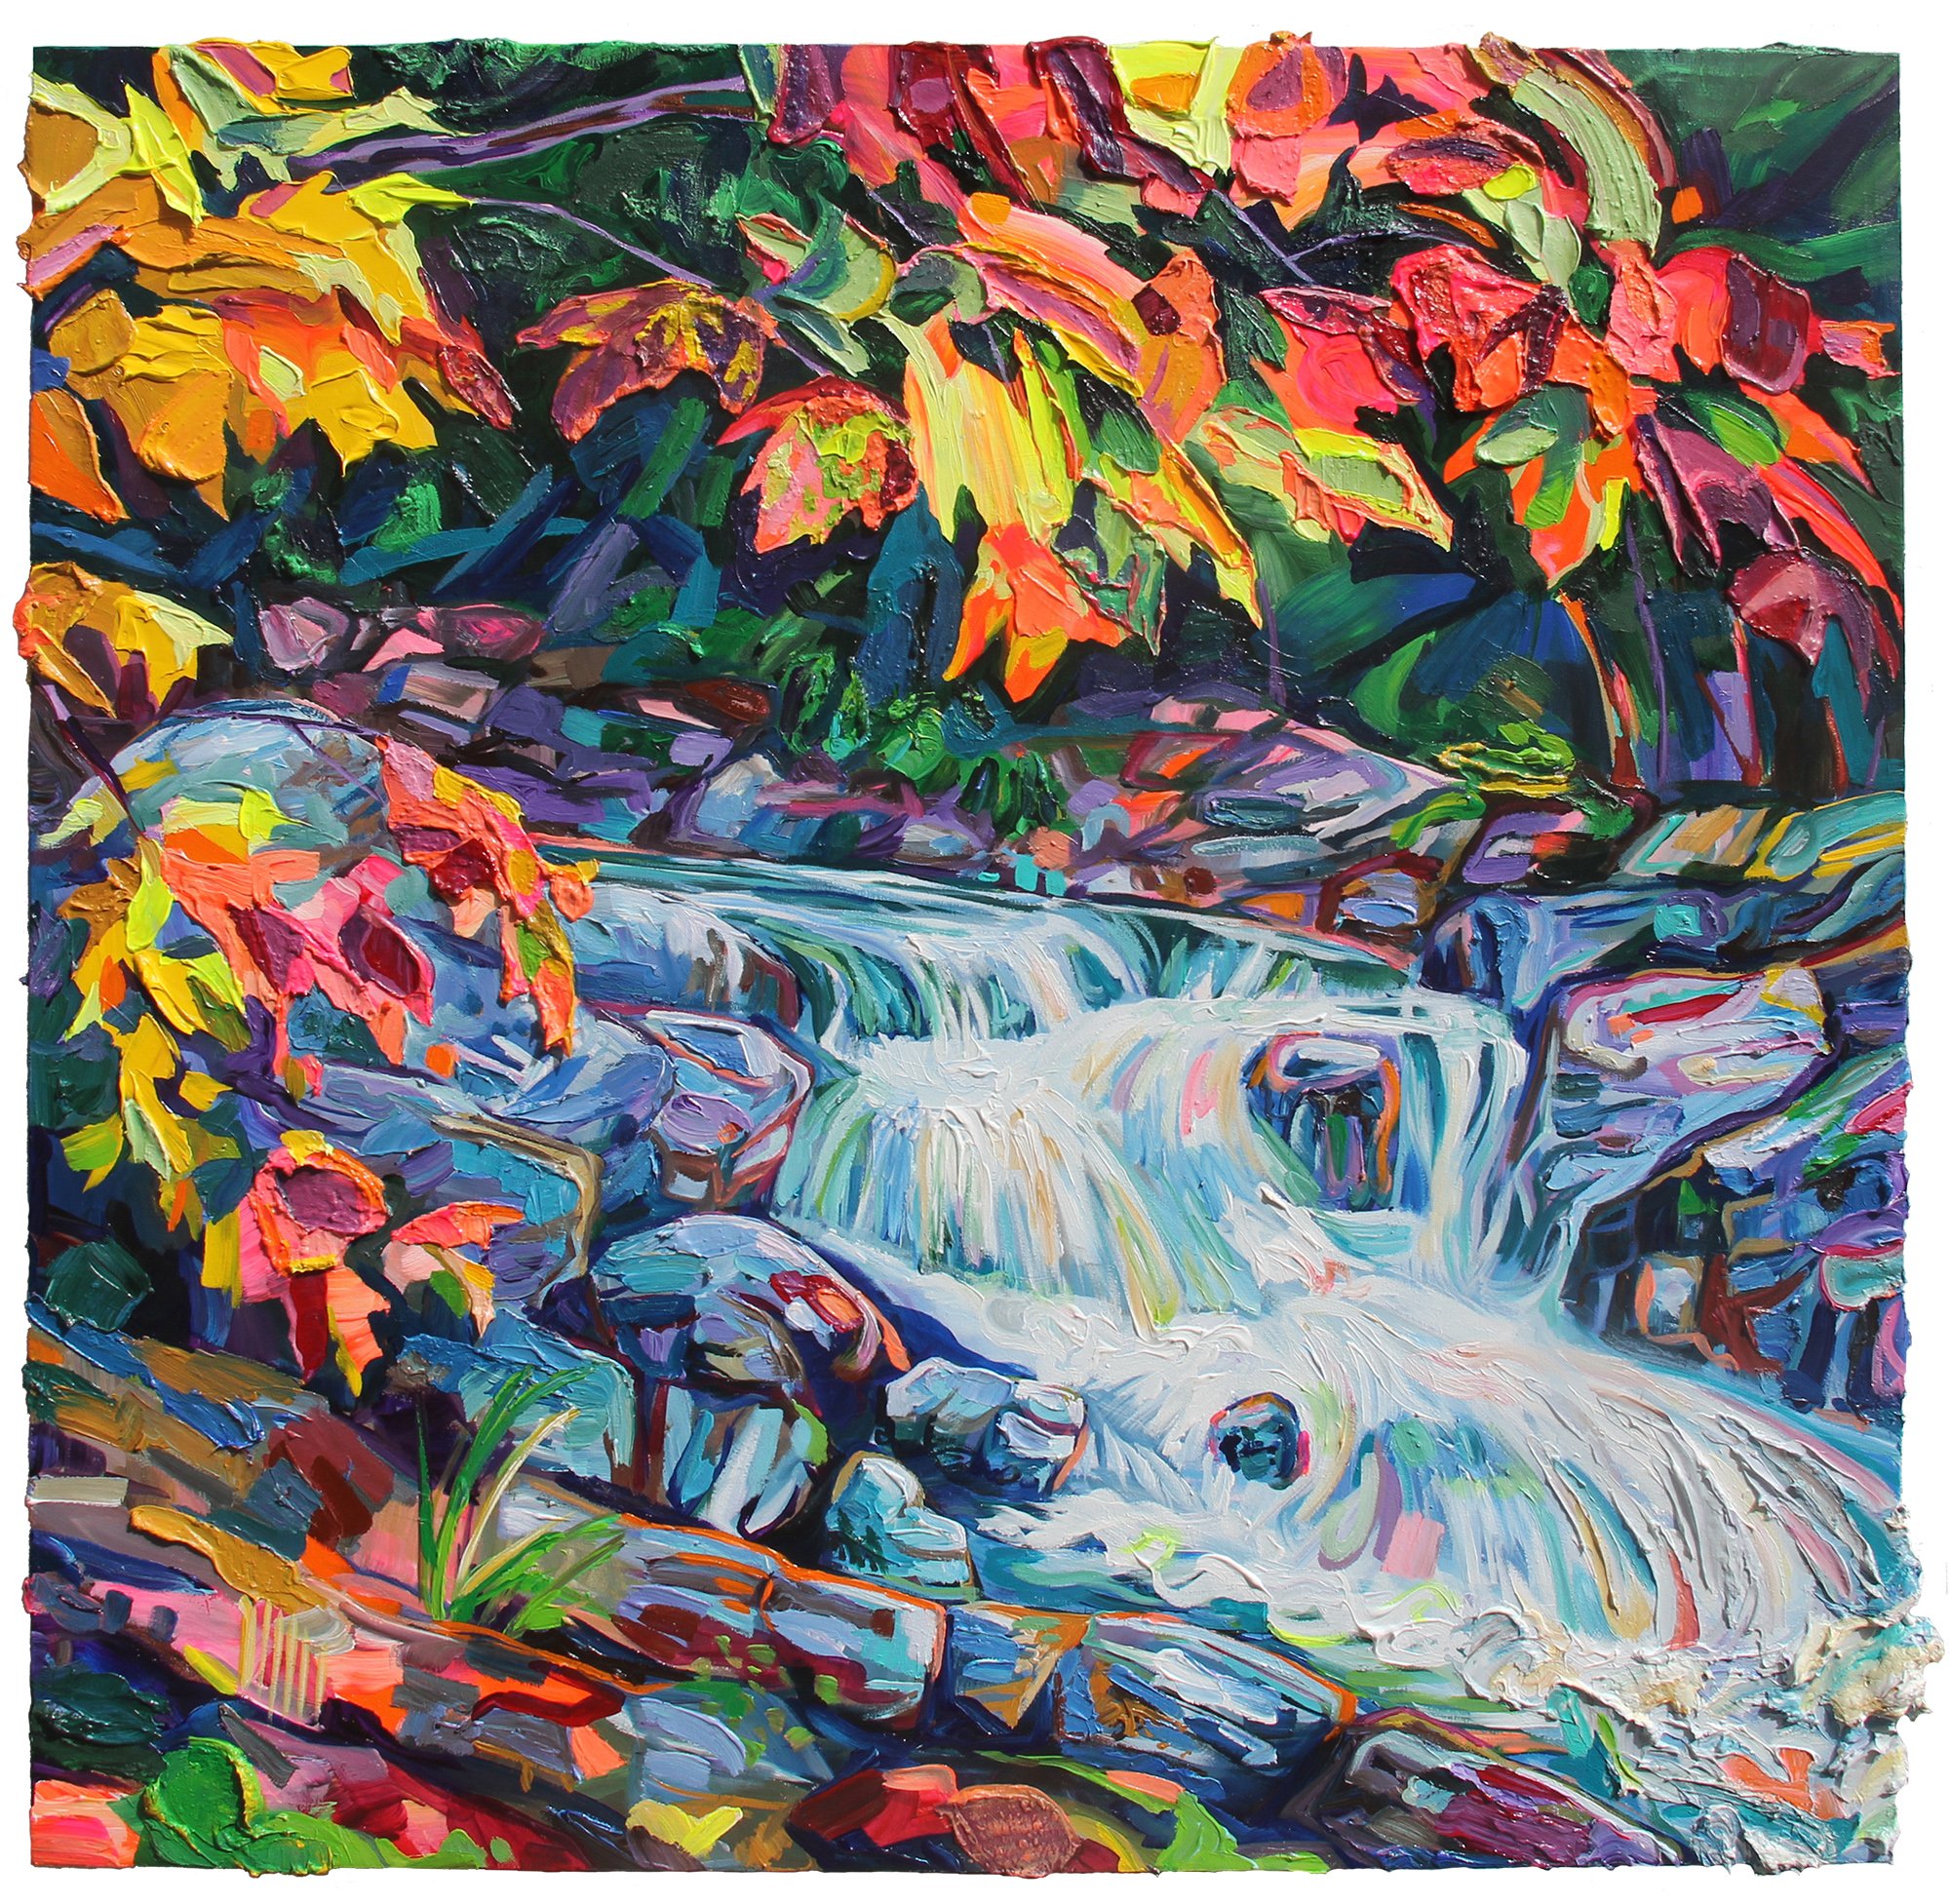 Oxtongue Rapids, 36 x 36", acrylic on panel, 2021